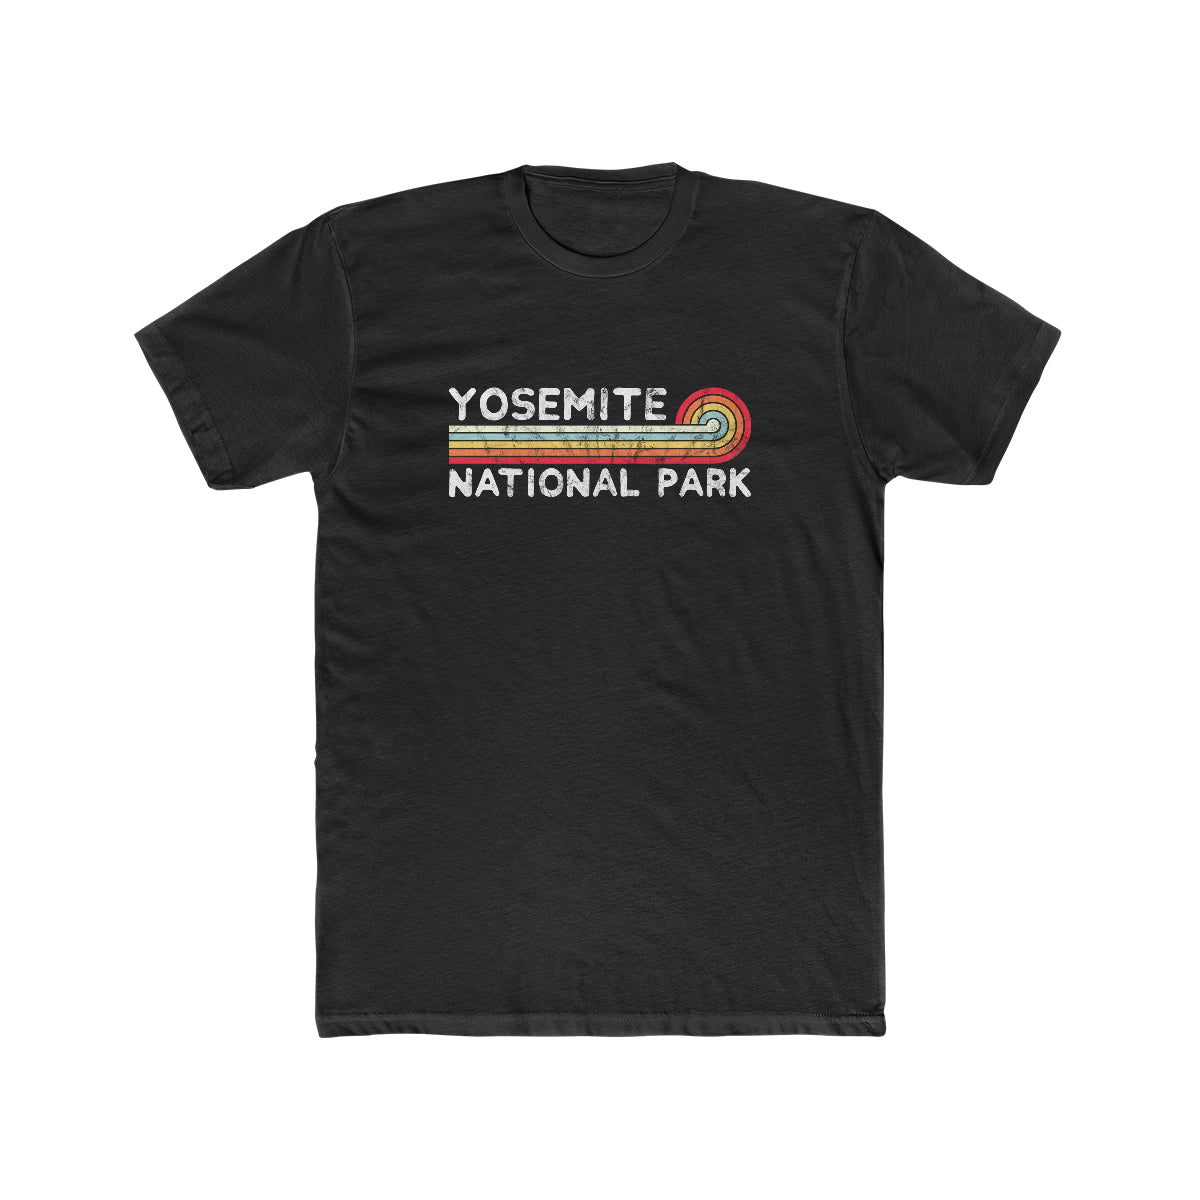 Yosemite National Park T-Shirt - Vintage Stretched Sunrise